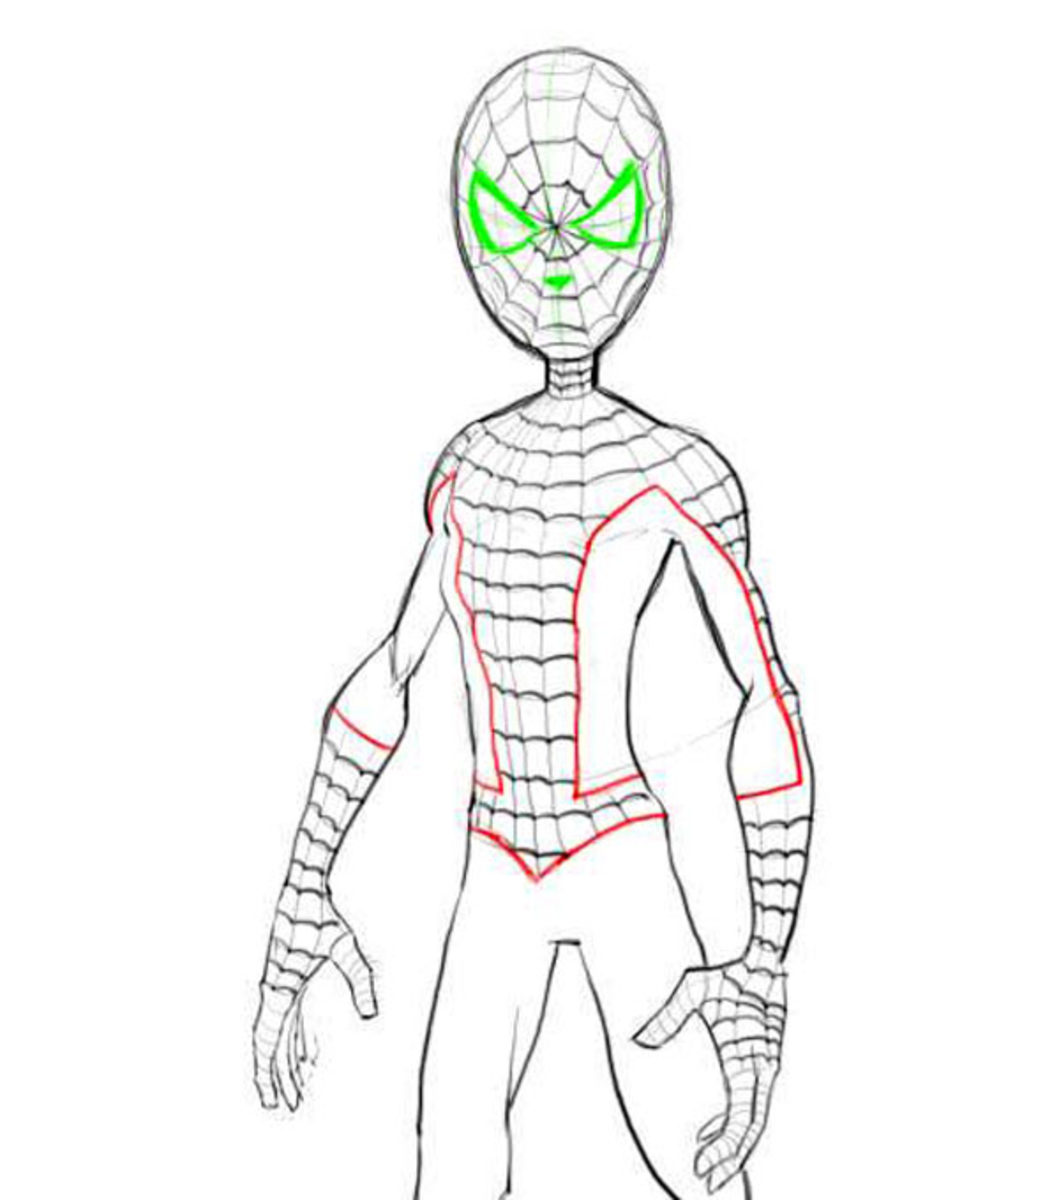 Drawing Spiderman No Way Home - @BlackSketchGallery - YouTube